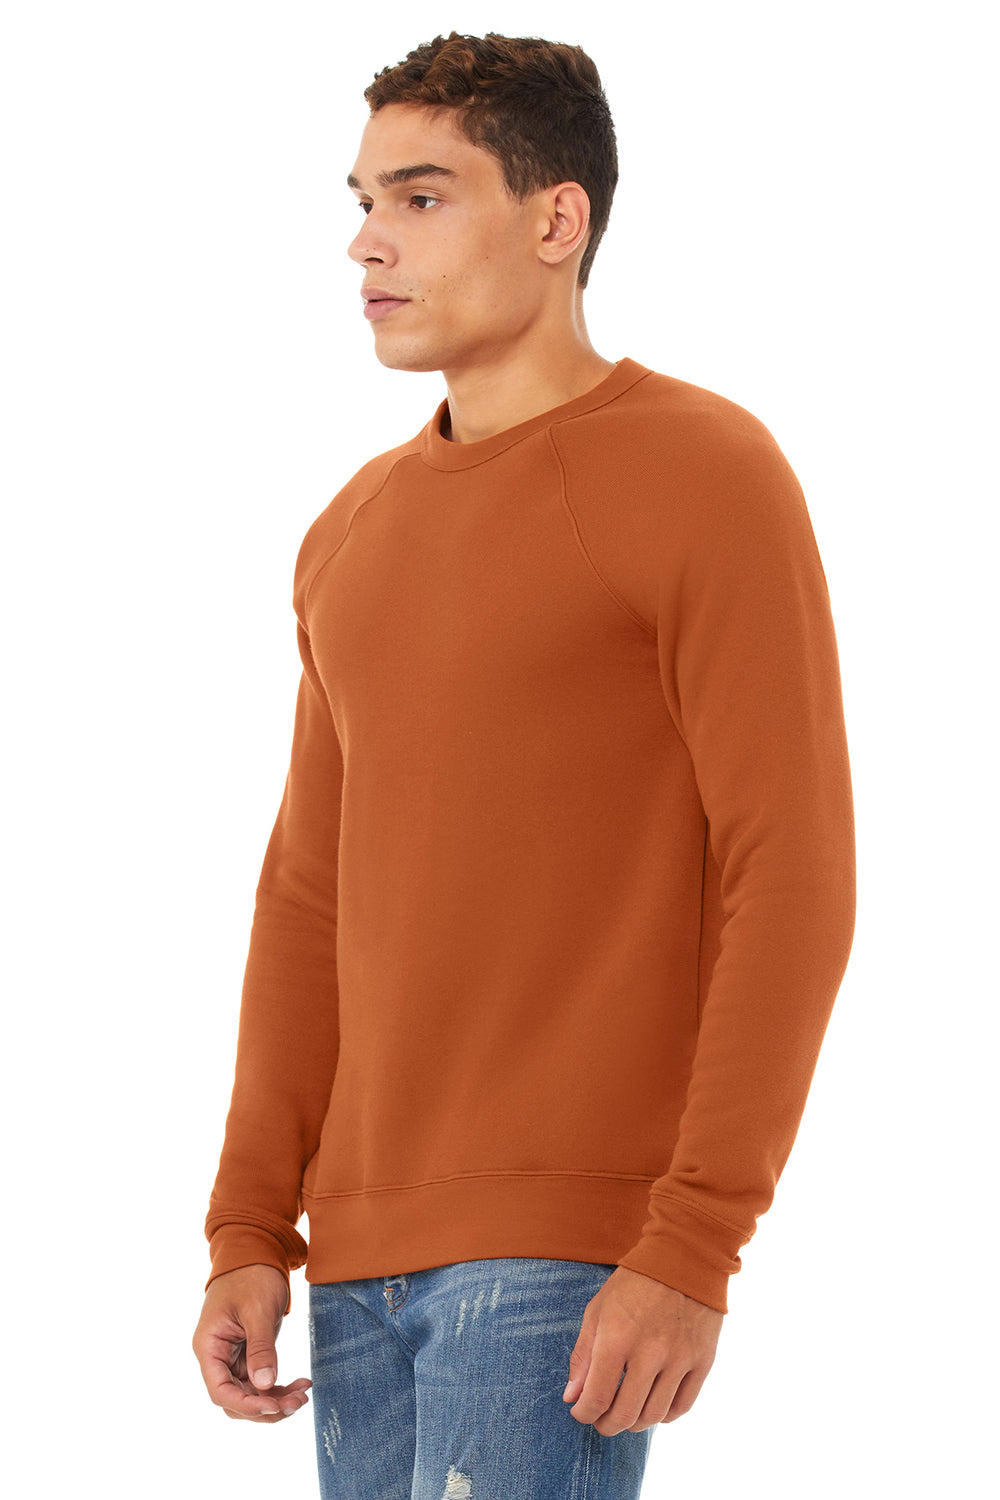 Bella + Canvas BC3901/3901 Mens Sponge Fleece Crewneck Sweatshirt Autumn Orange Model 3Q